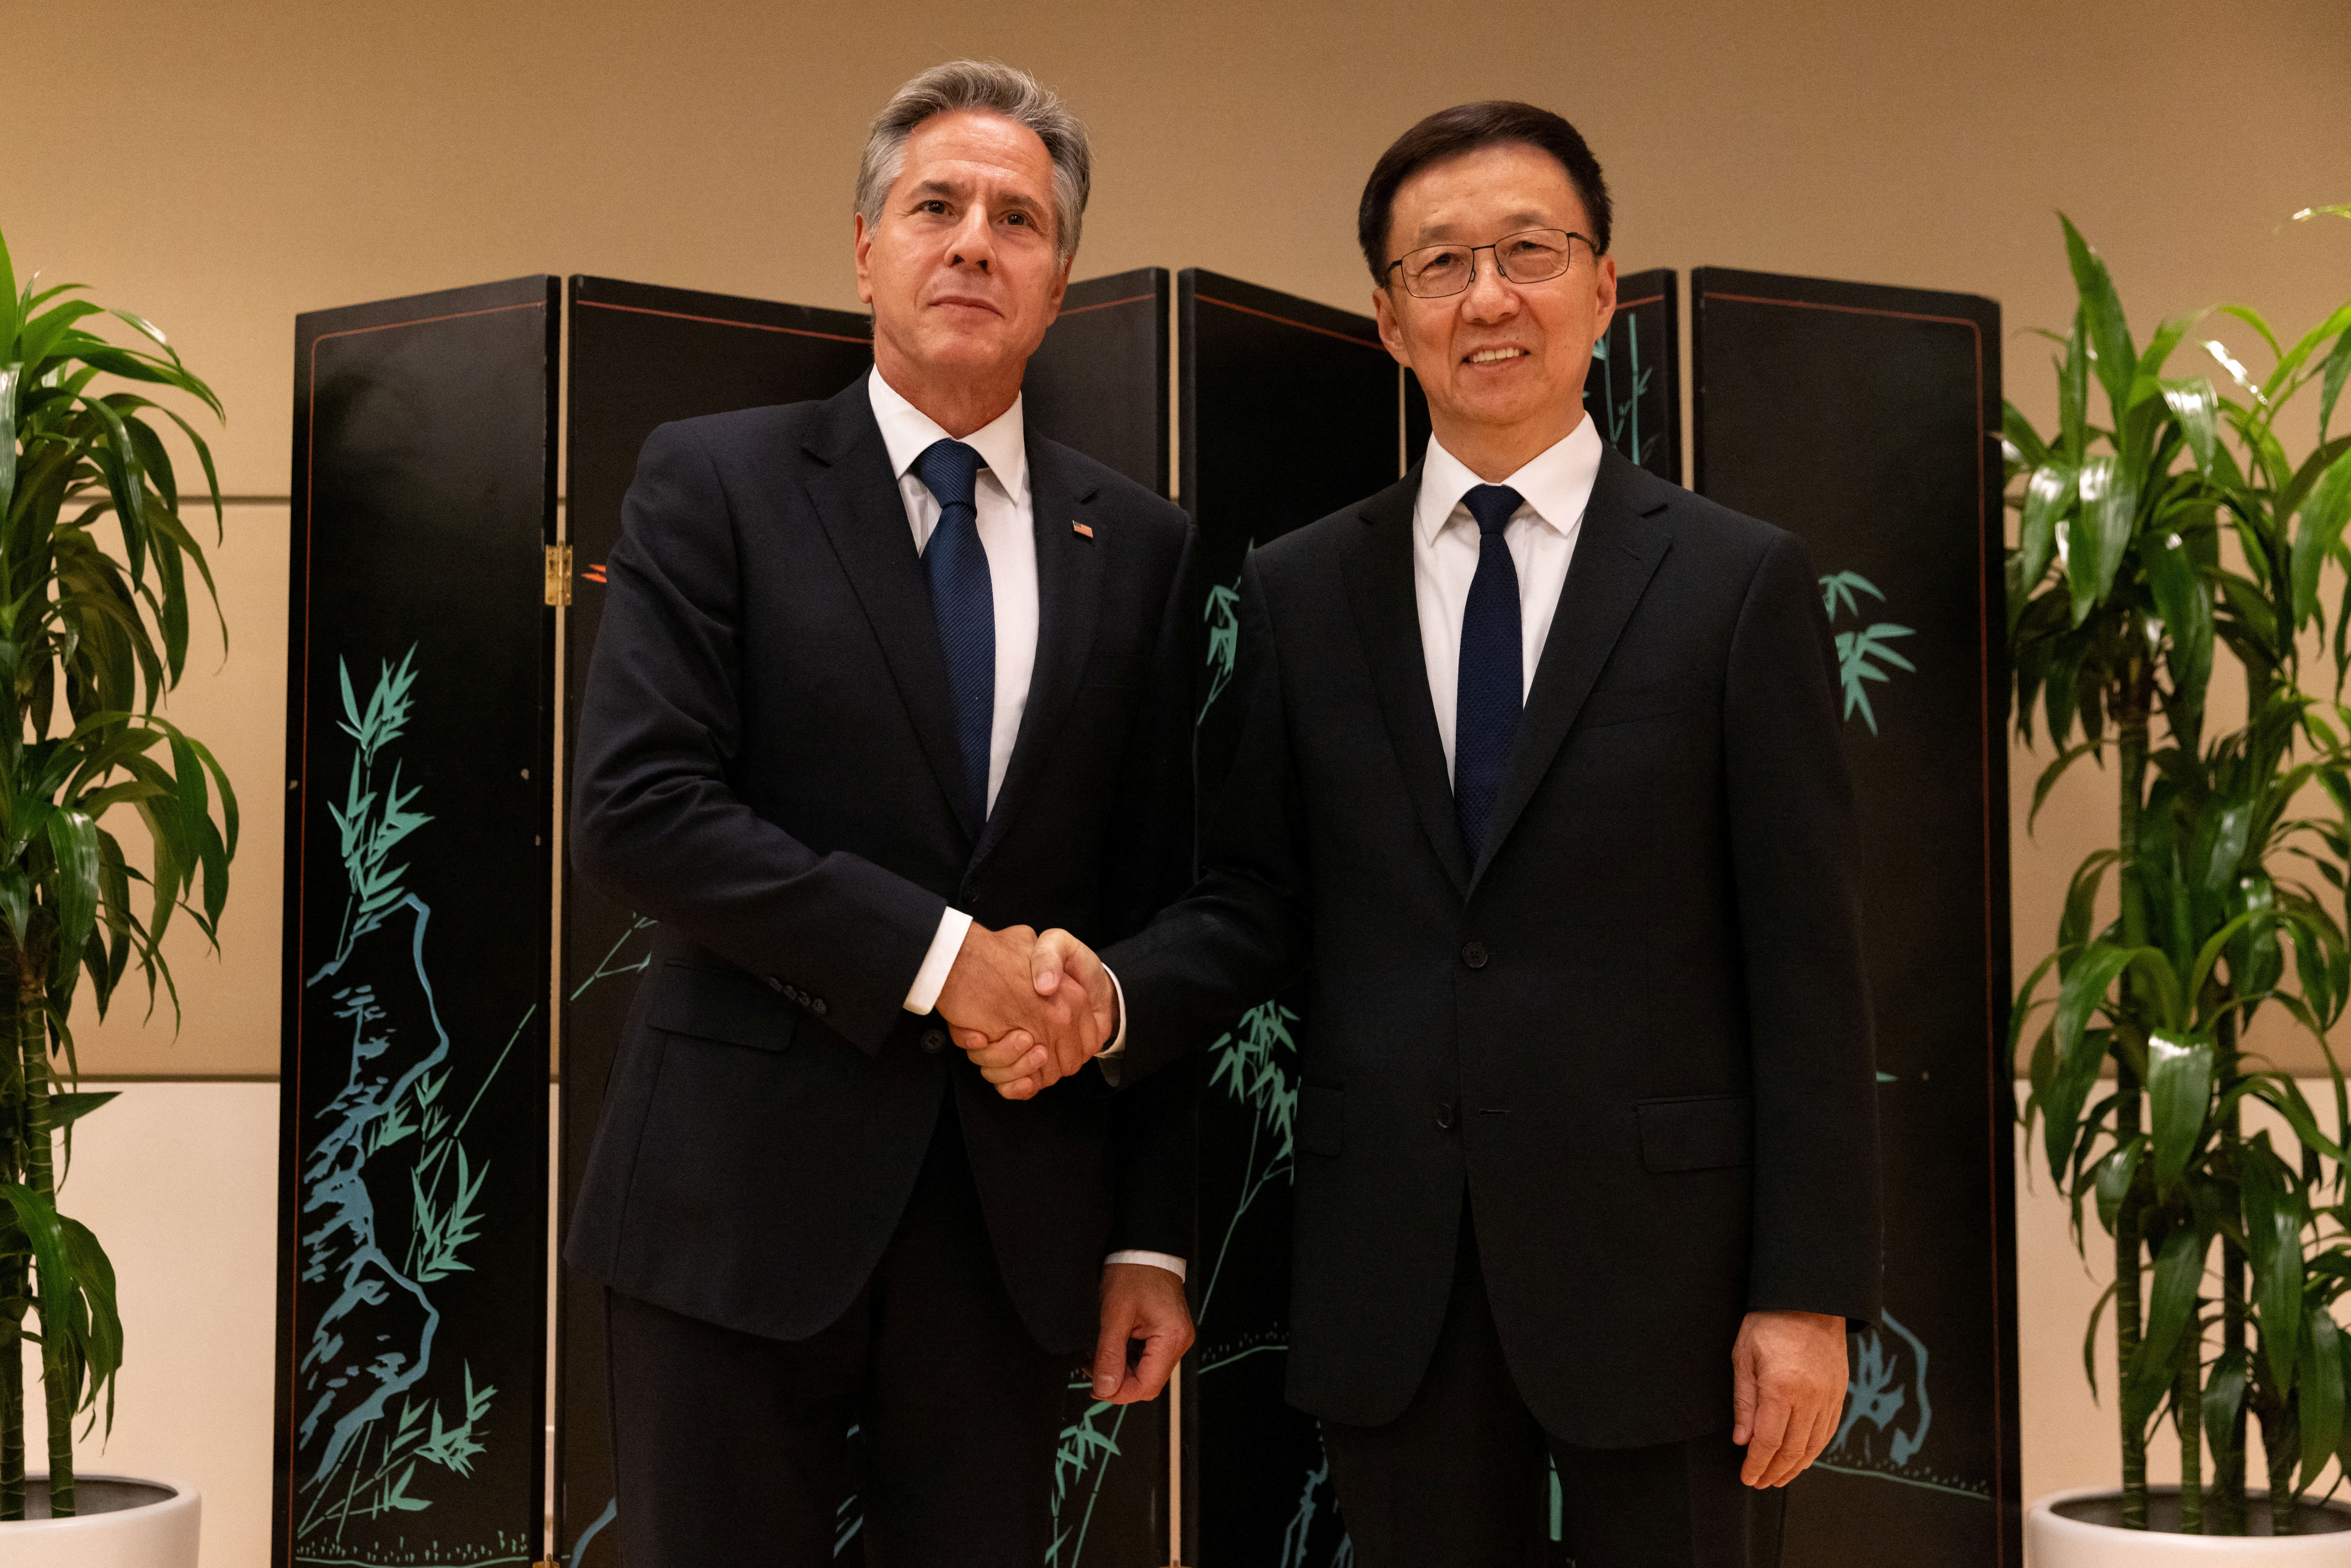 Top US diplomat Blinken meets China's VP Han at U.N. amid ... - Figure 1